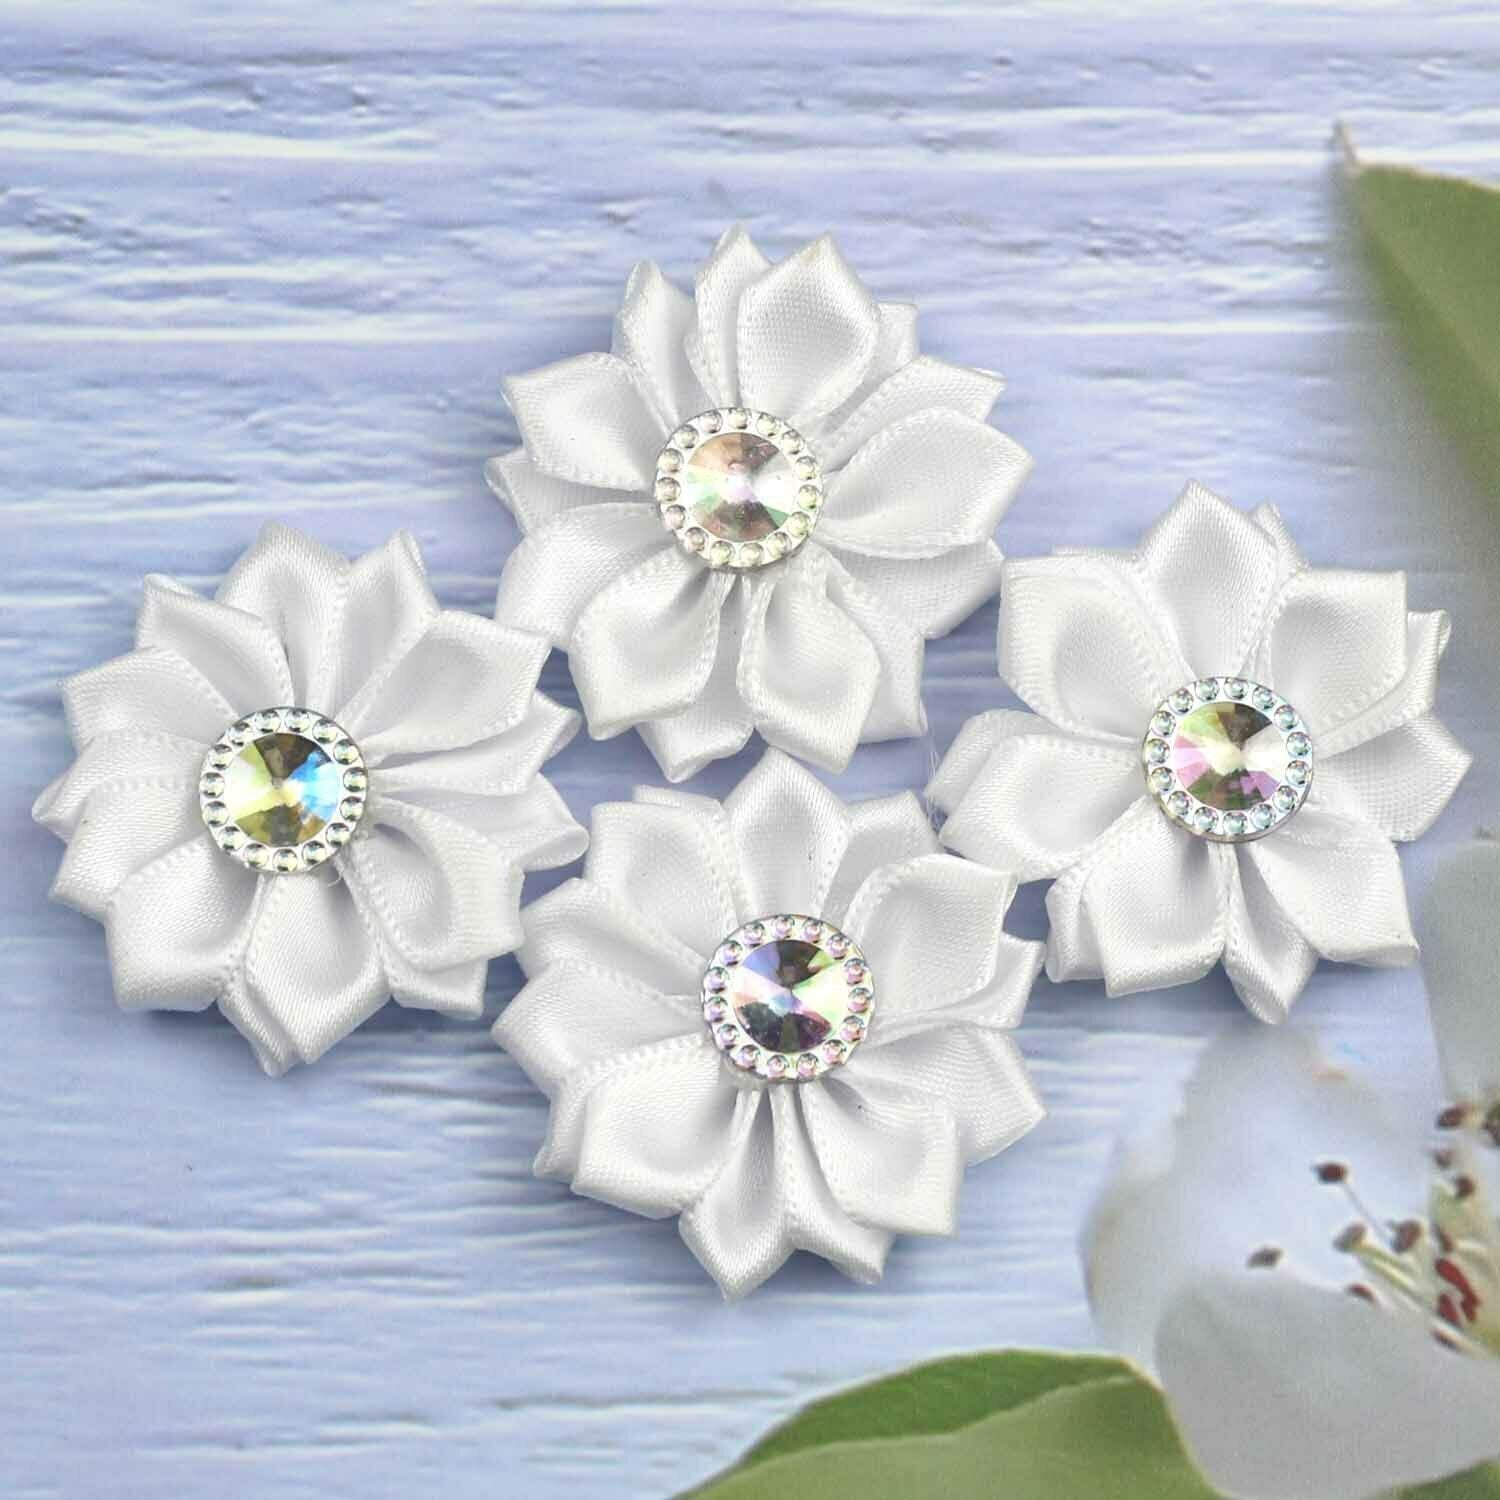 1.5" 10Pcs White Satin w/Rhinestone Flowers Ribbons Appliques Craft Supplies